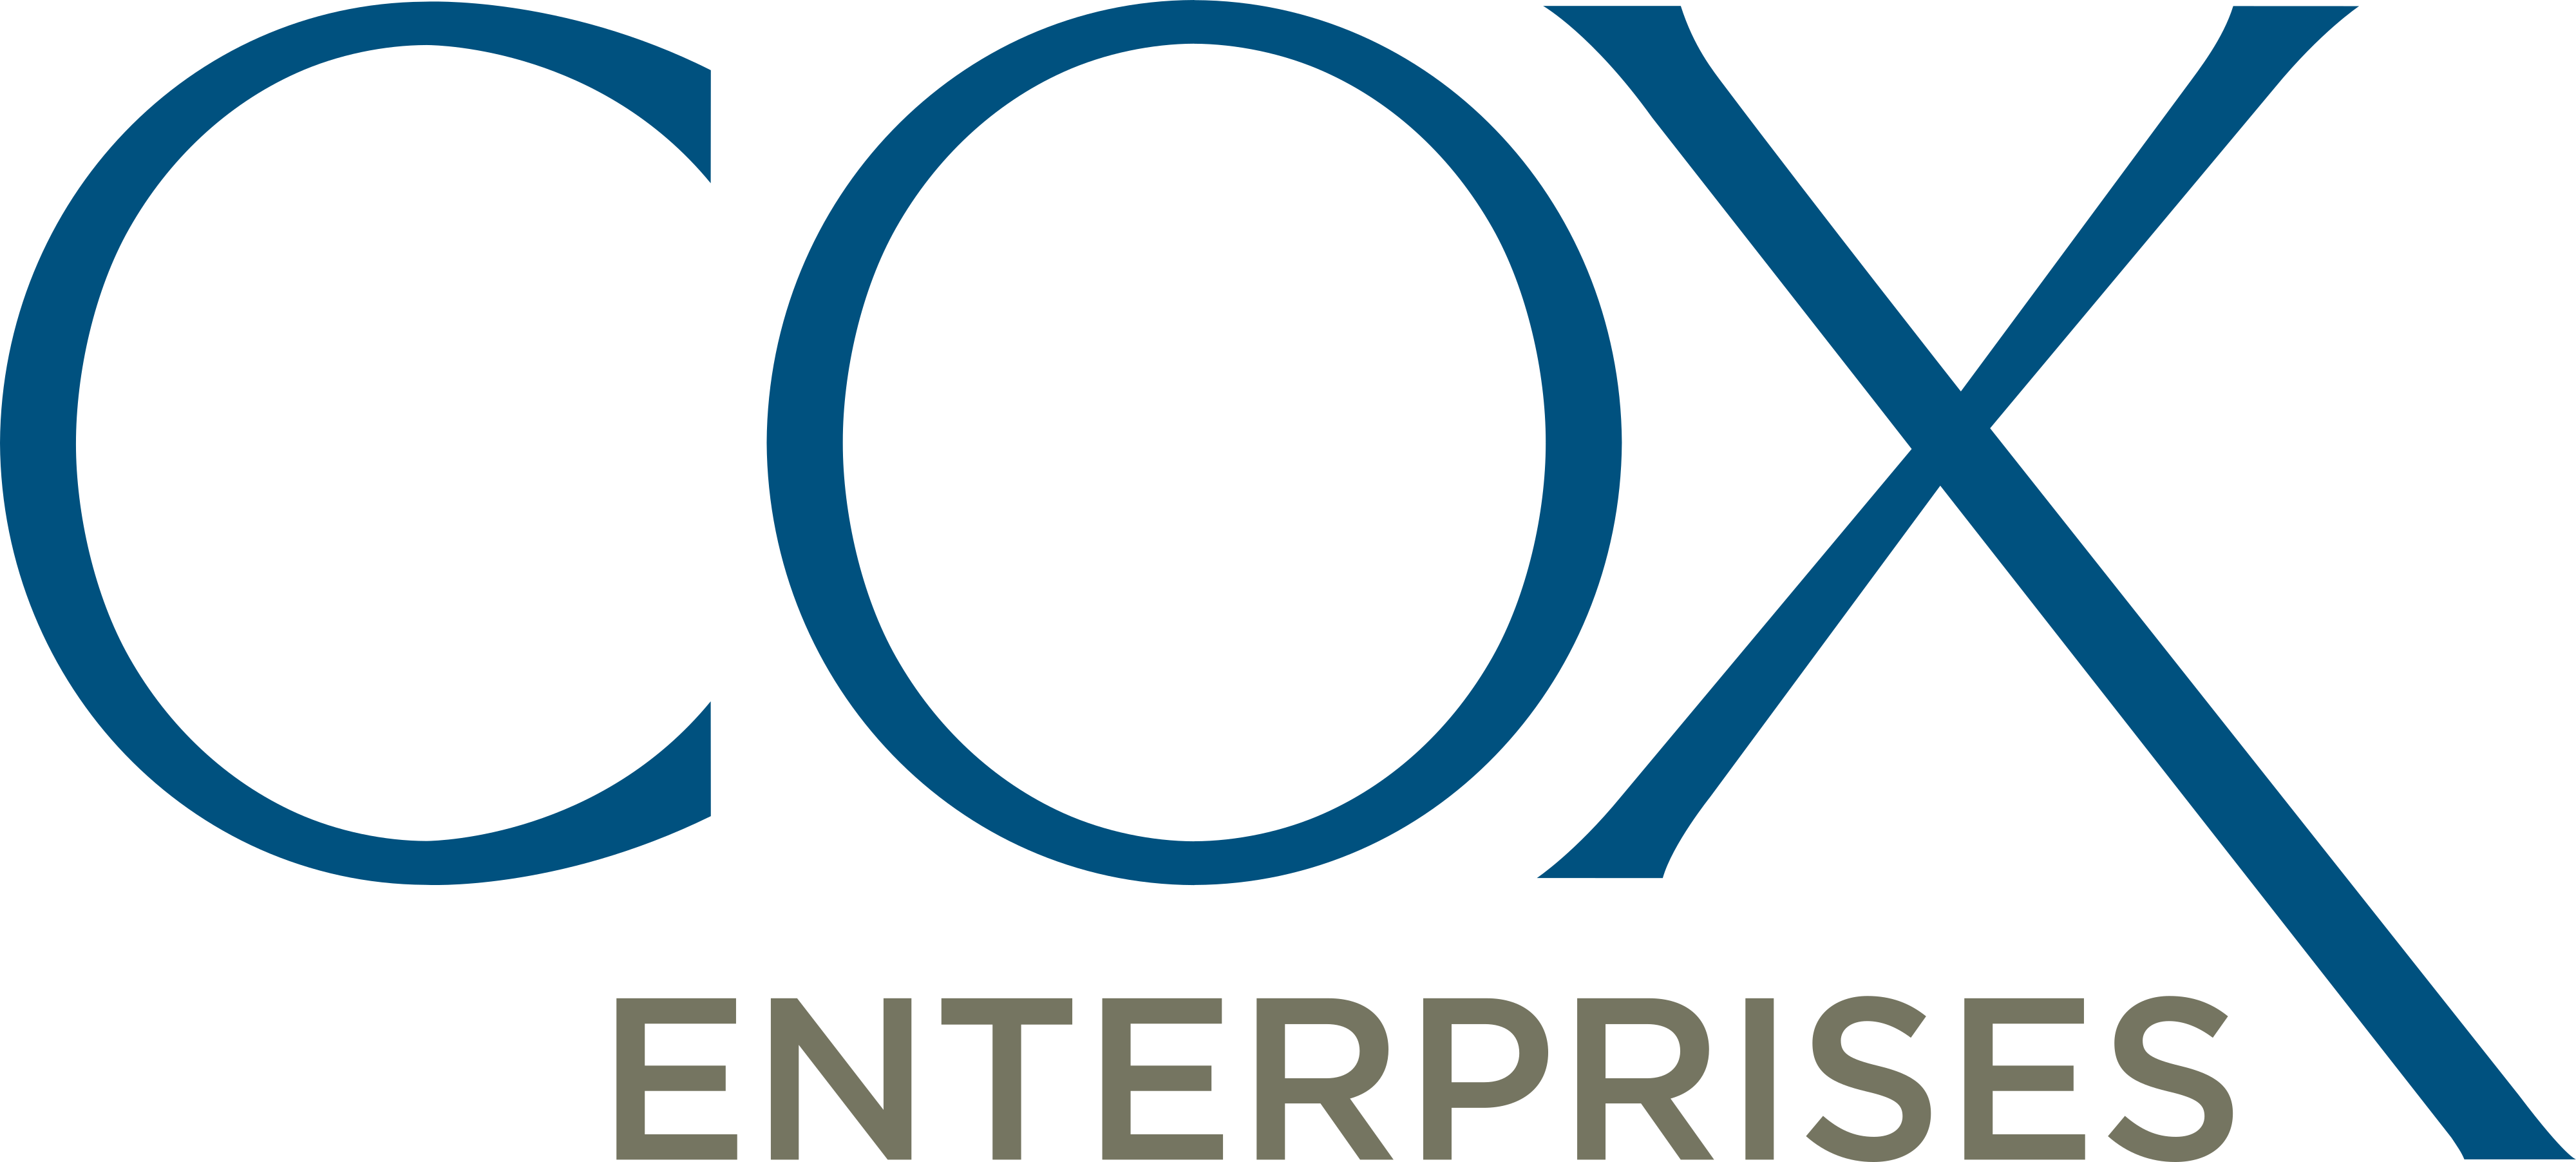 Cox Enterprises logo - download.